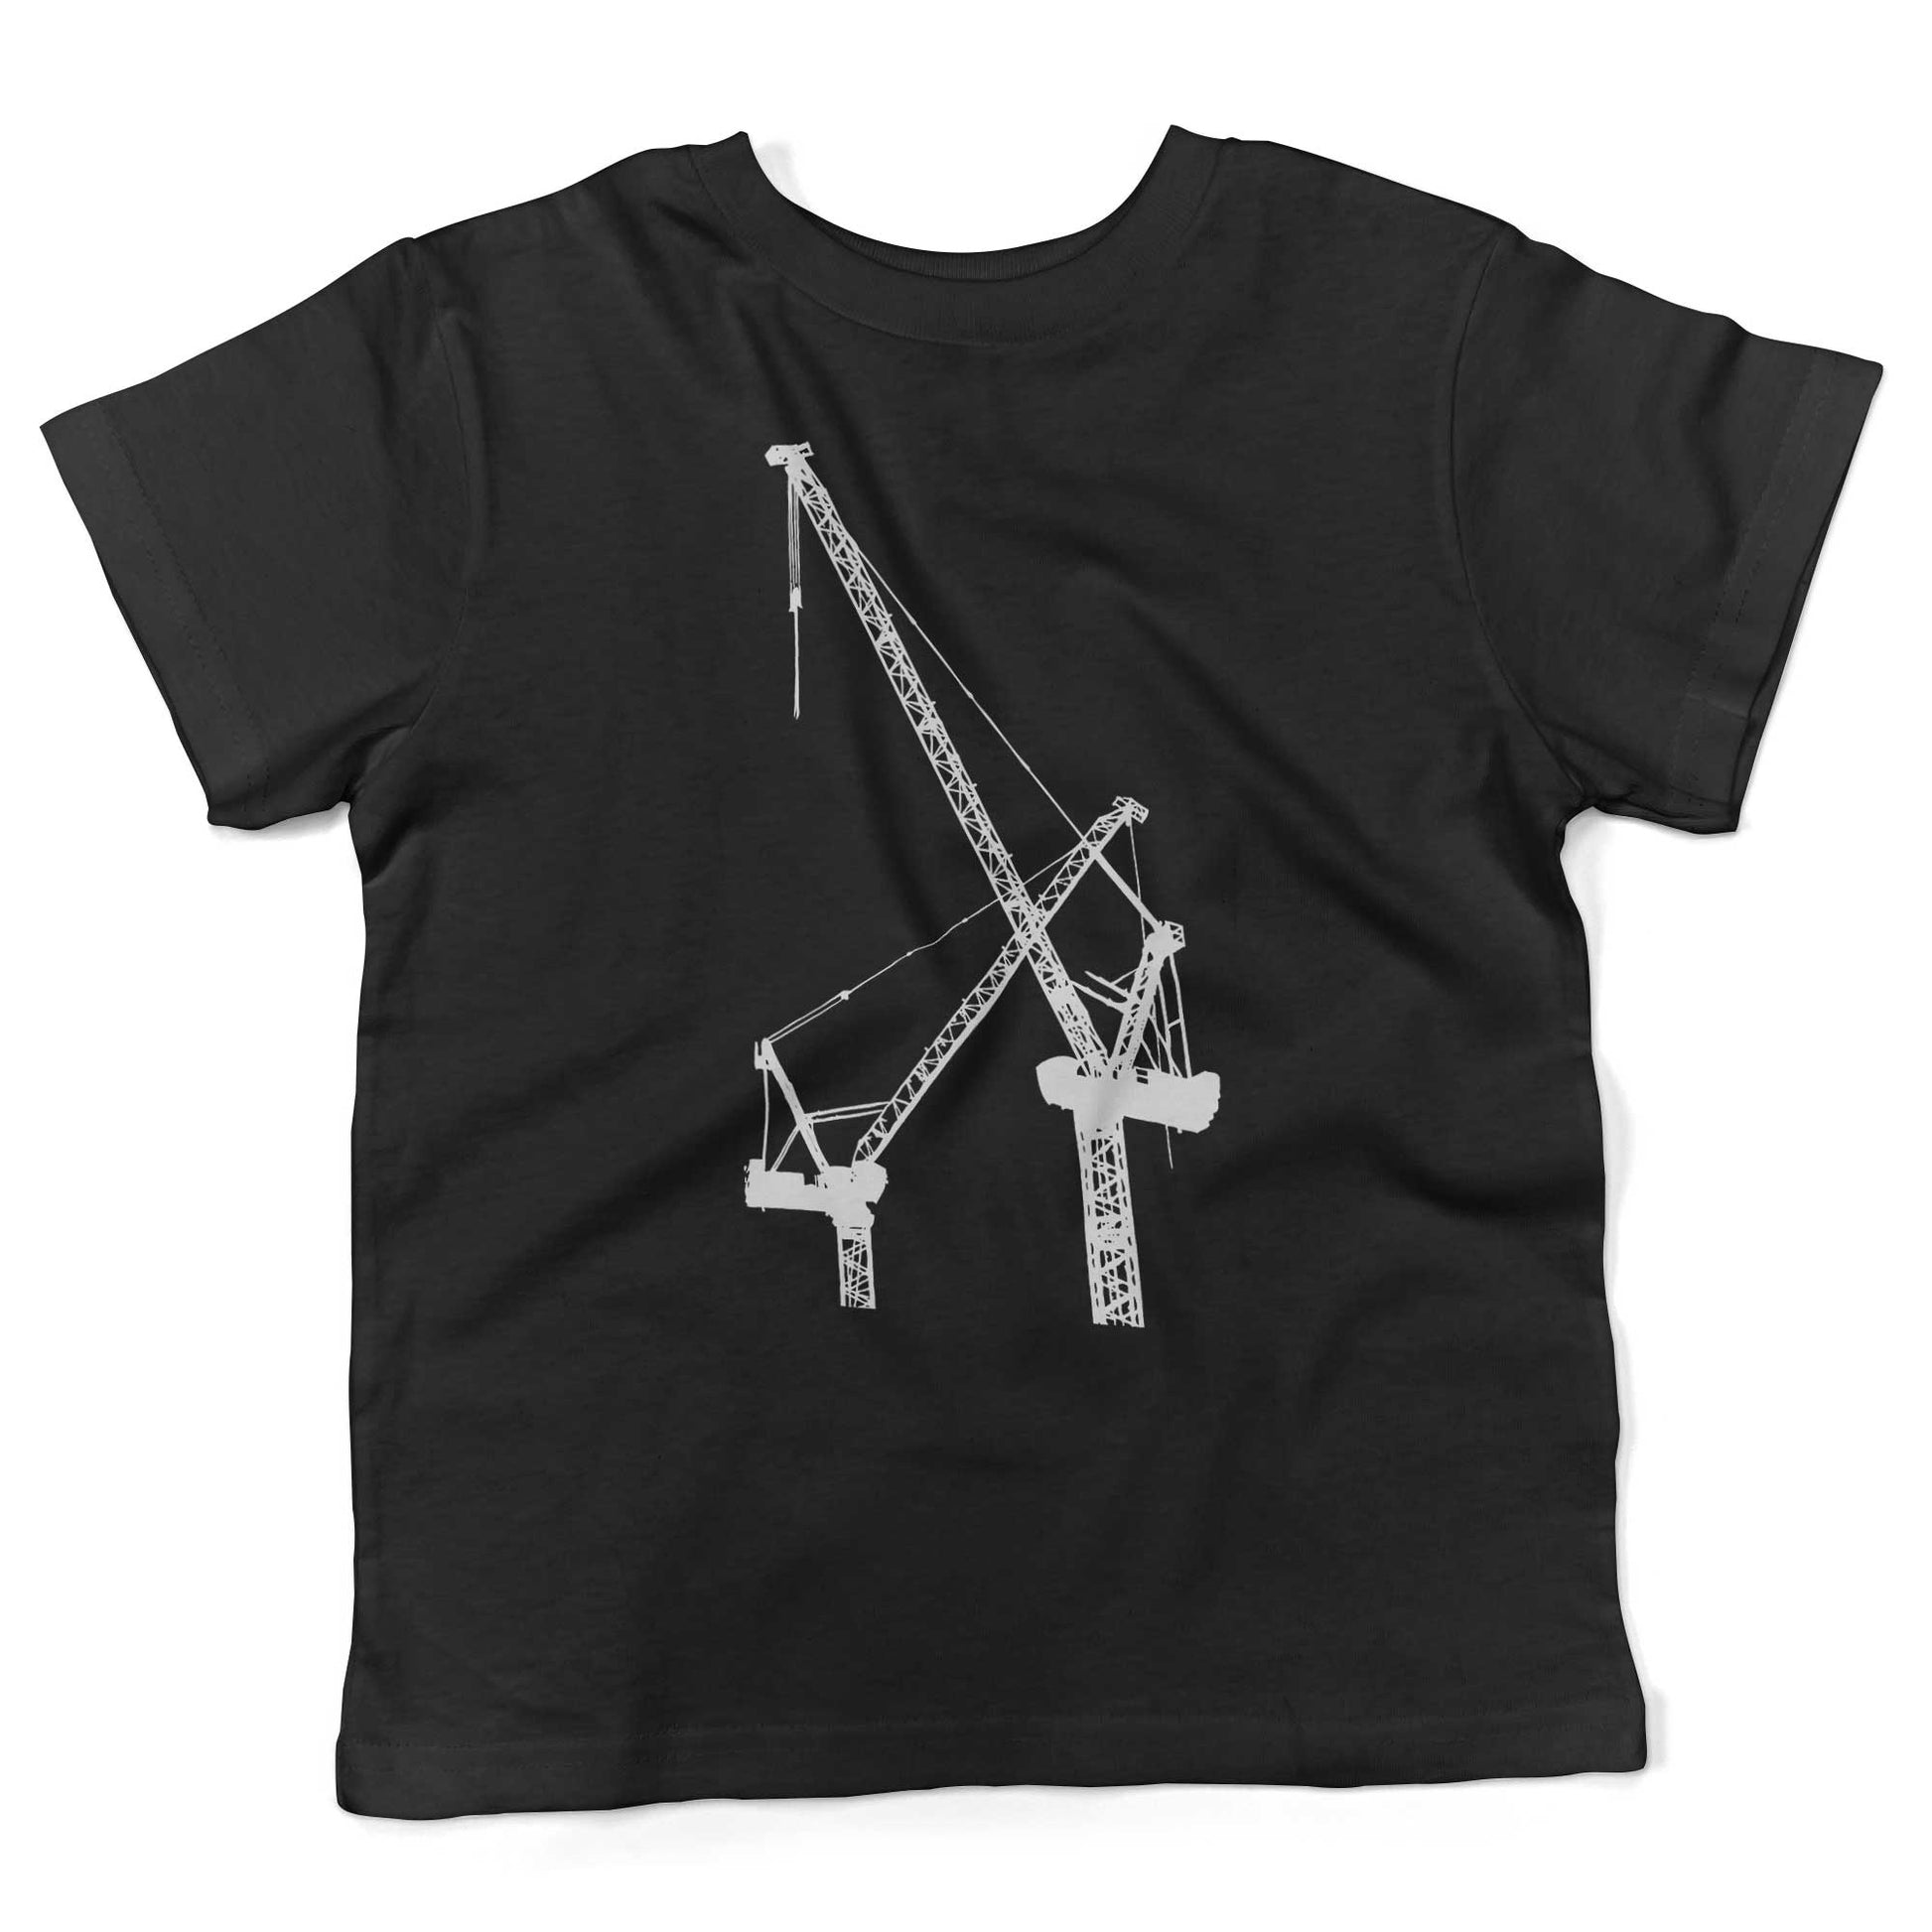 Construction Cranes Toddler Shirt-Organic Black-2T